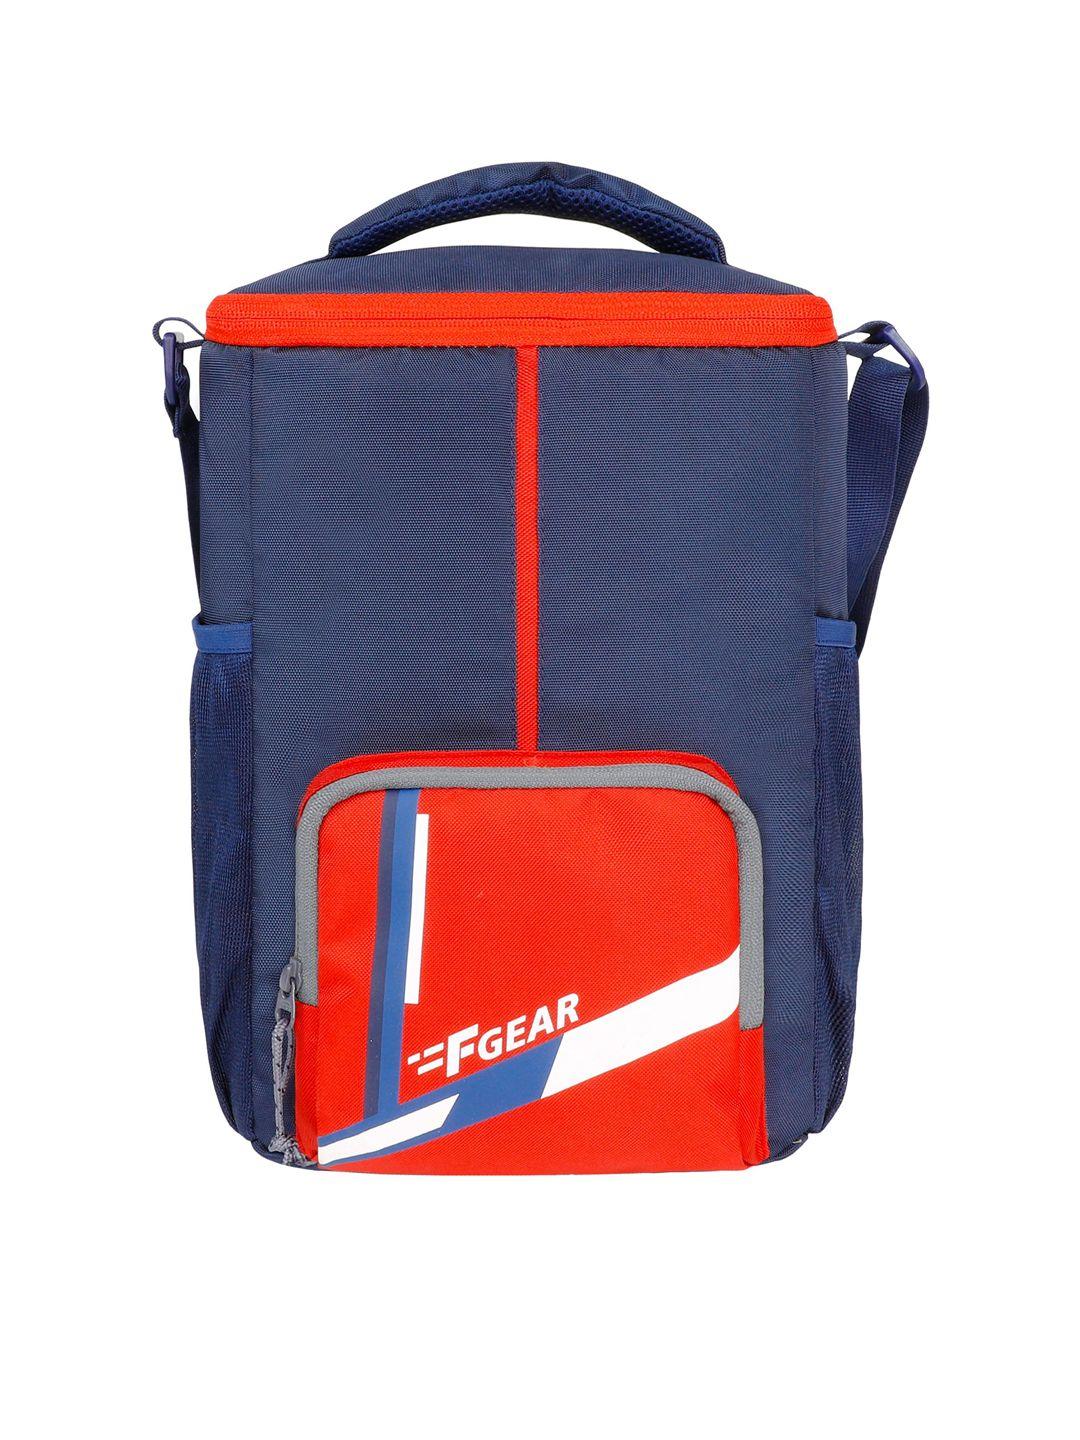 f gear colourblocked travel lunch bag